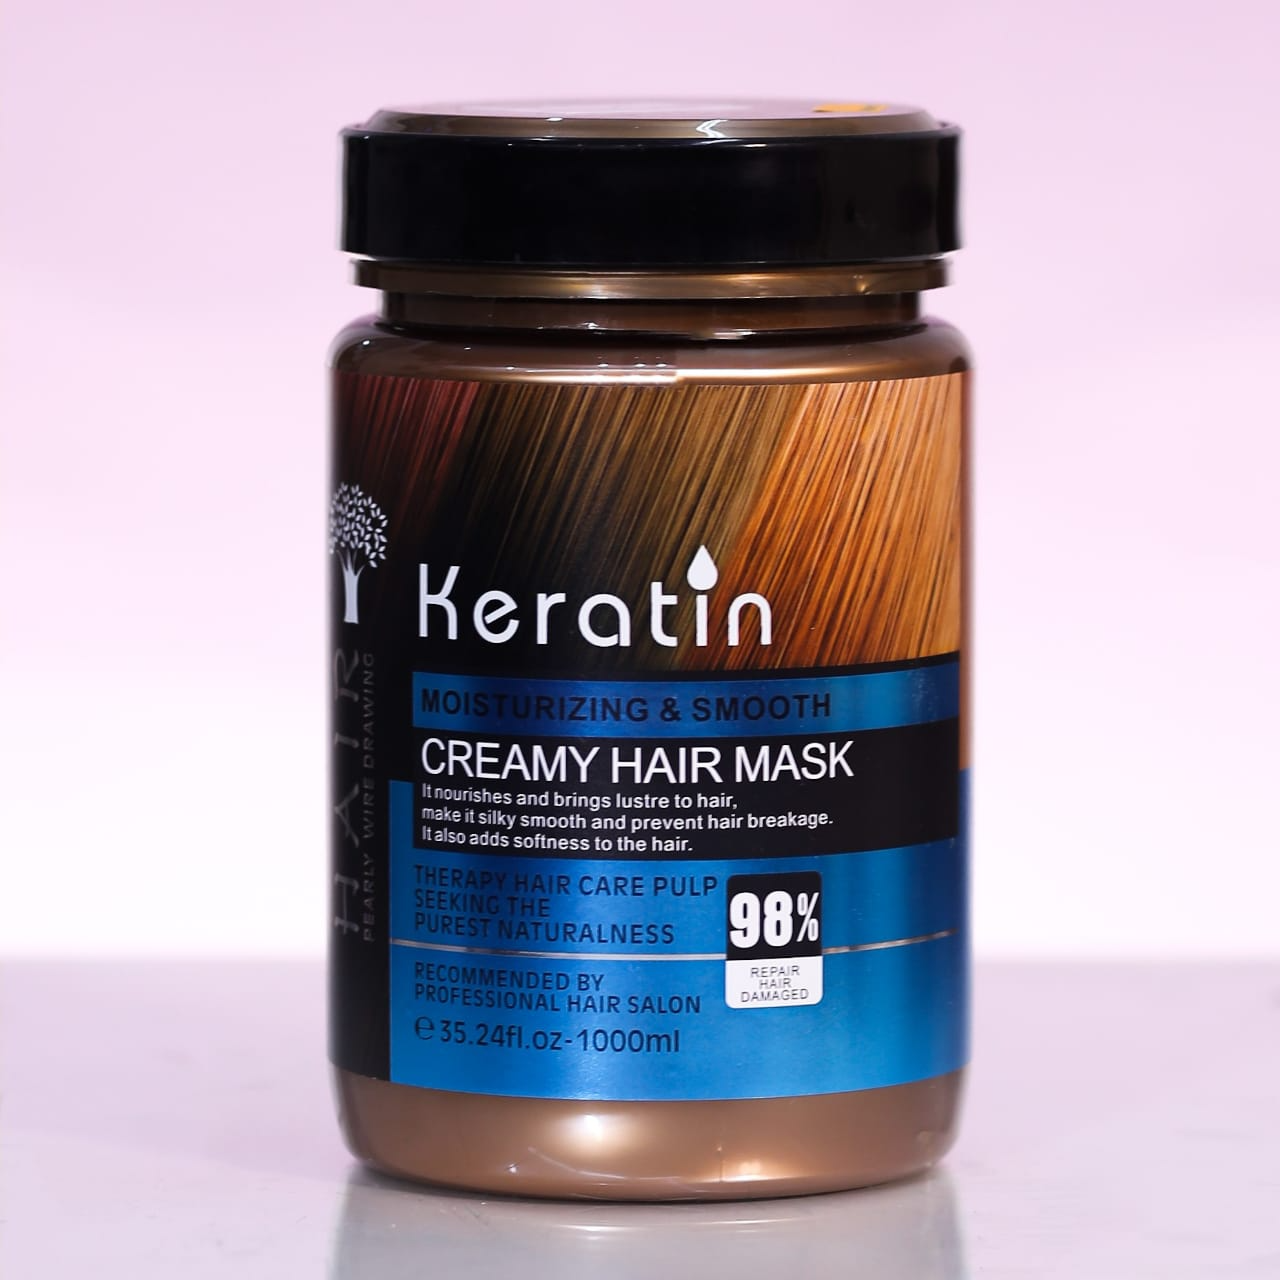 KERATIN CREAMY HAIR MASK MOISTURIZING & SMOOTH 1000 ML